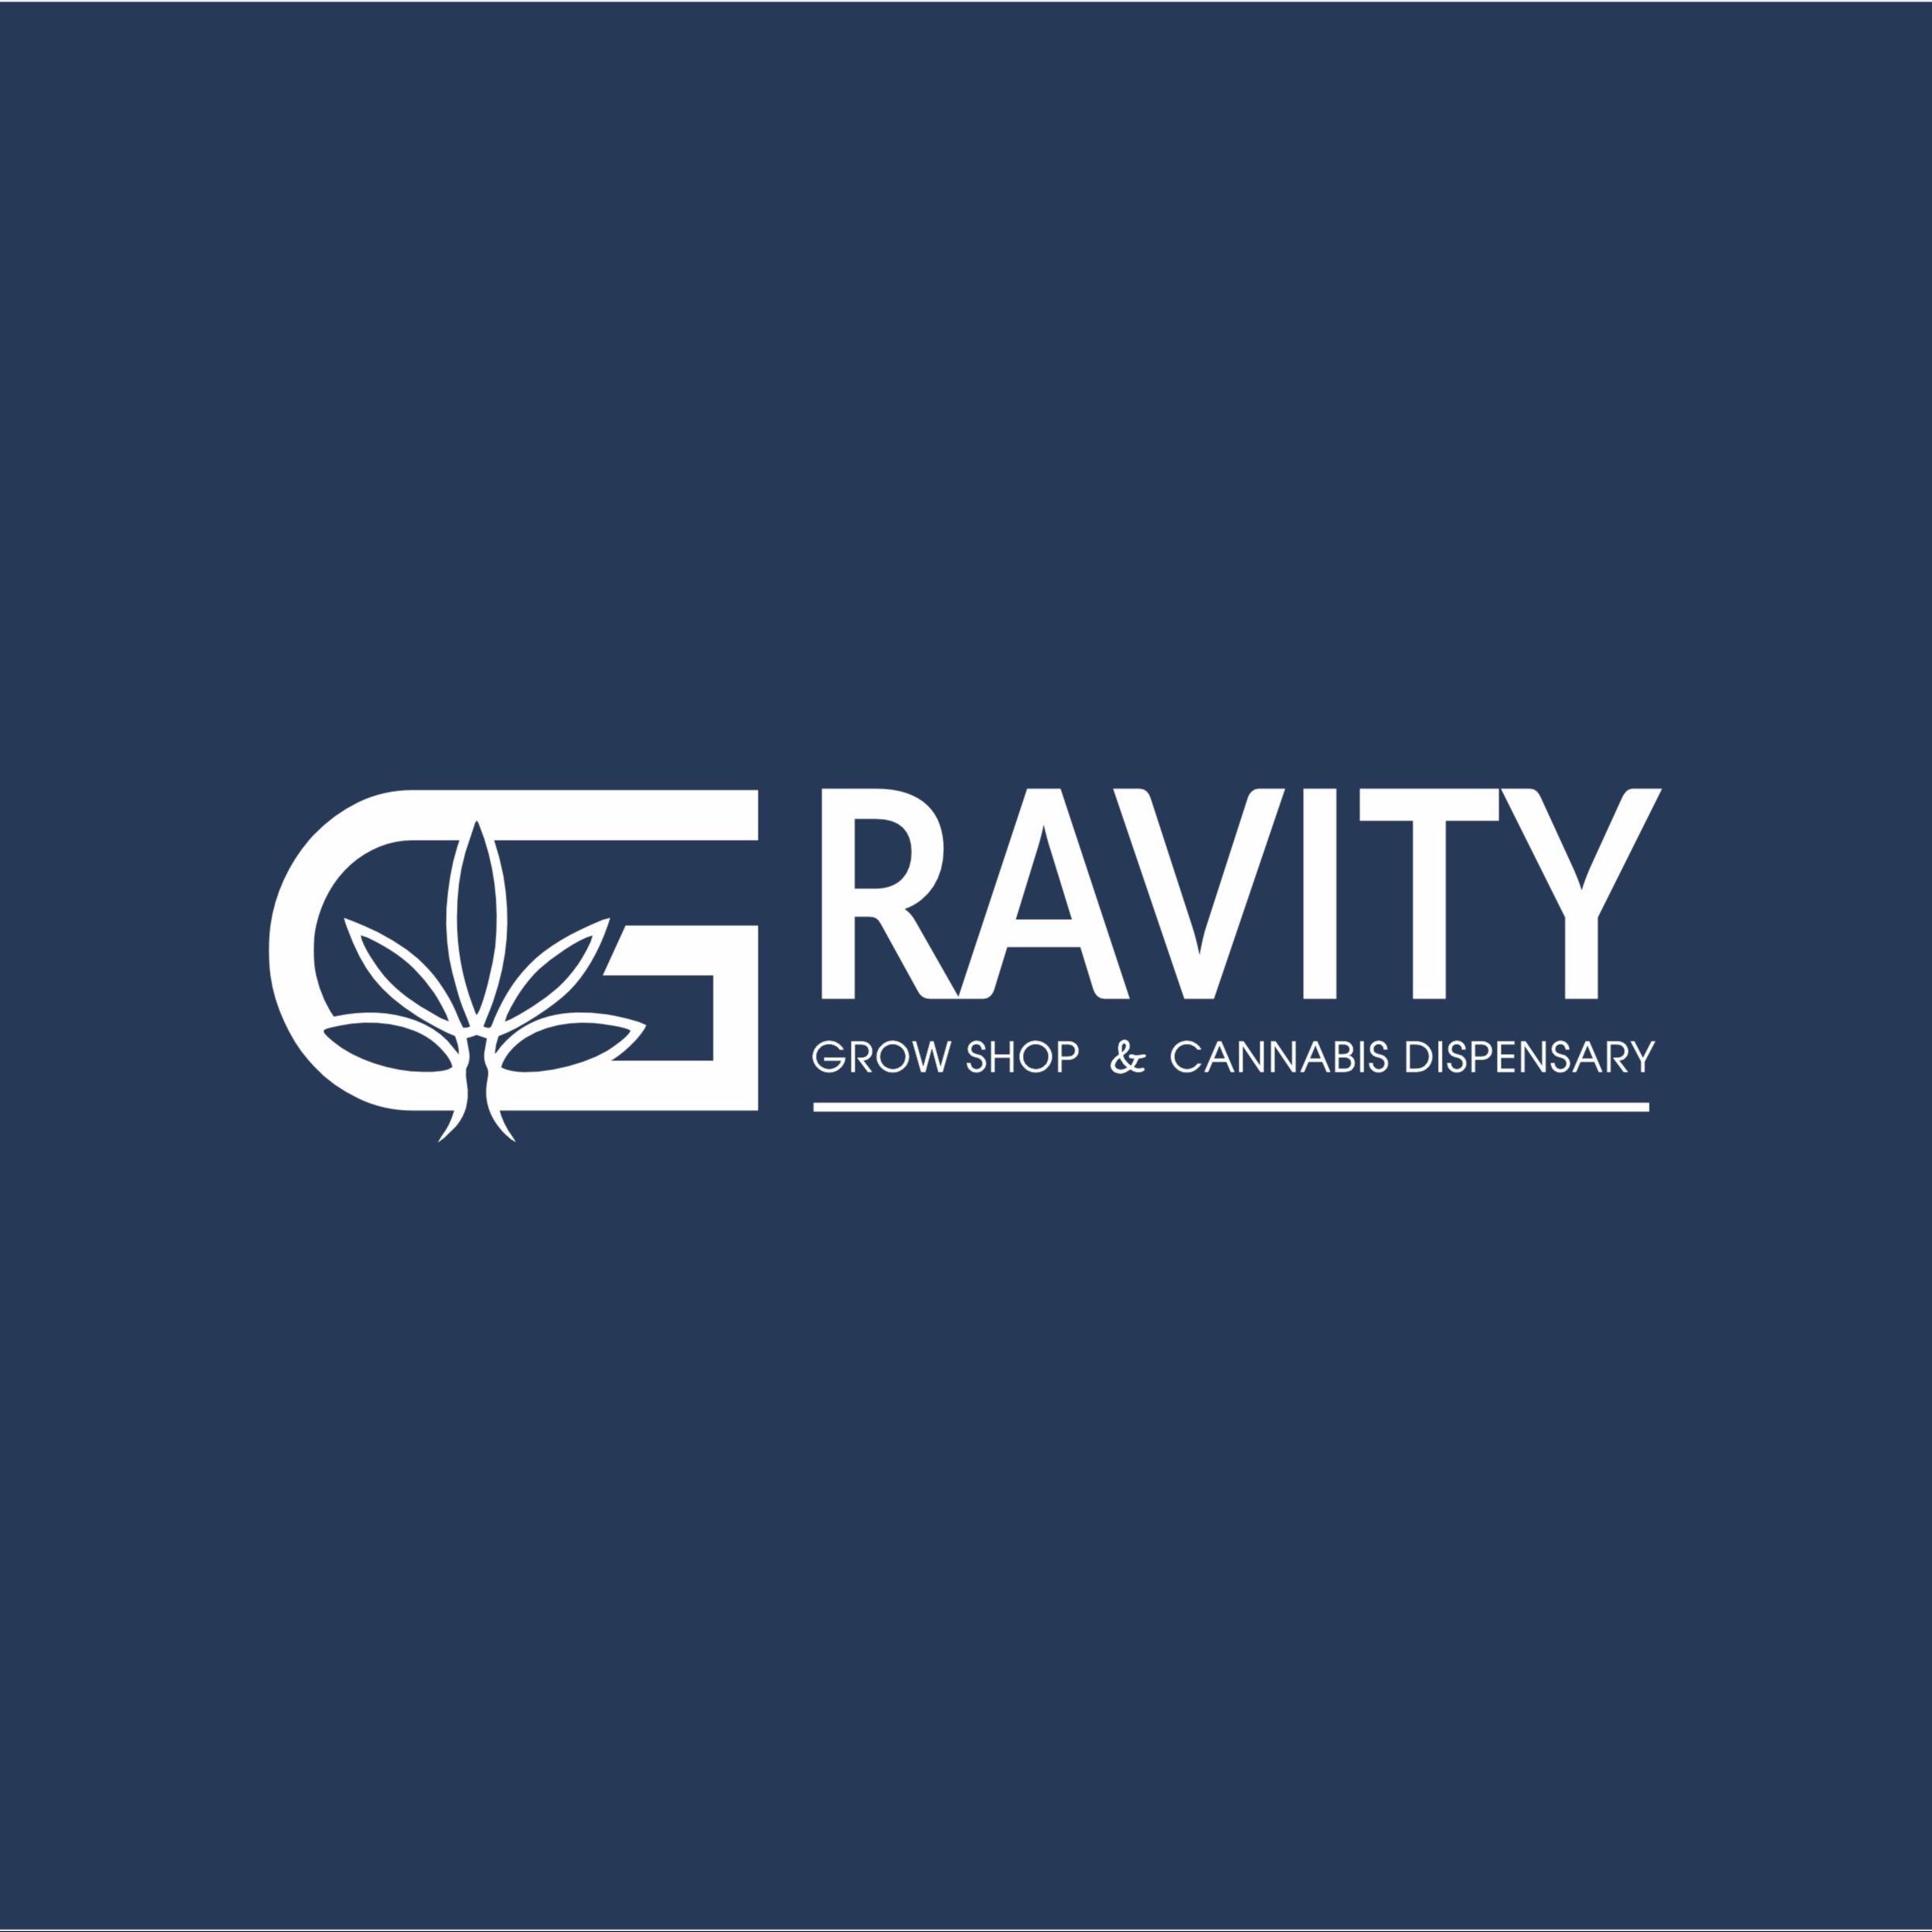 Gravity, Expl.ravity